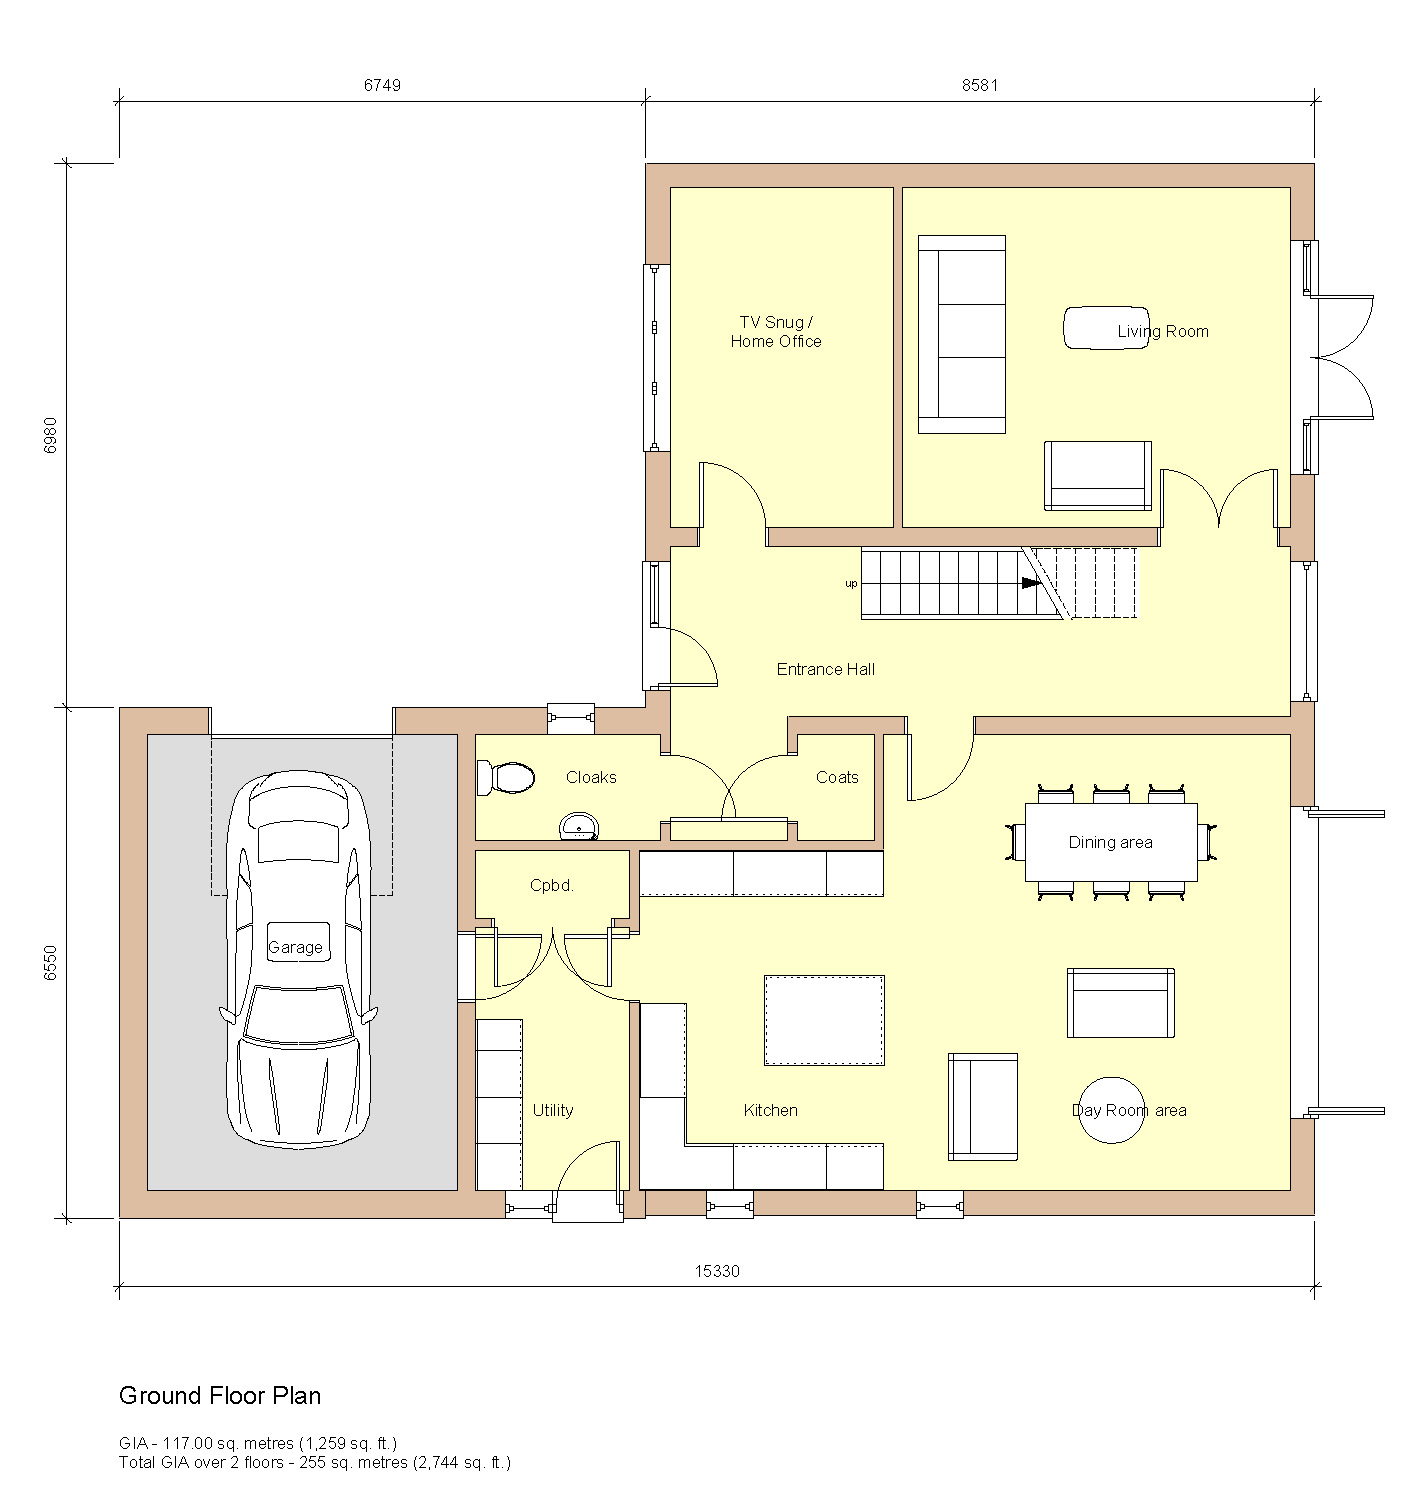 Proposed ground floor layout, bespoke plot in Tunbridge Wells